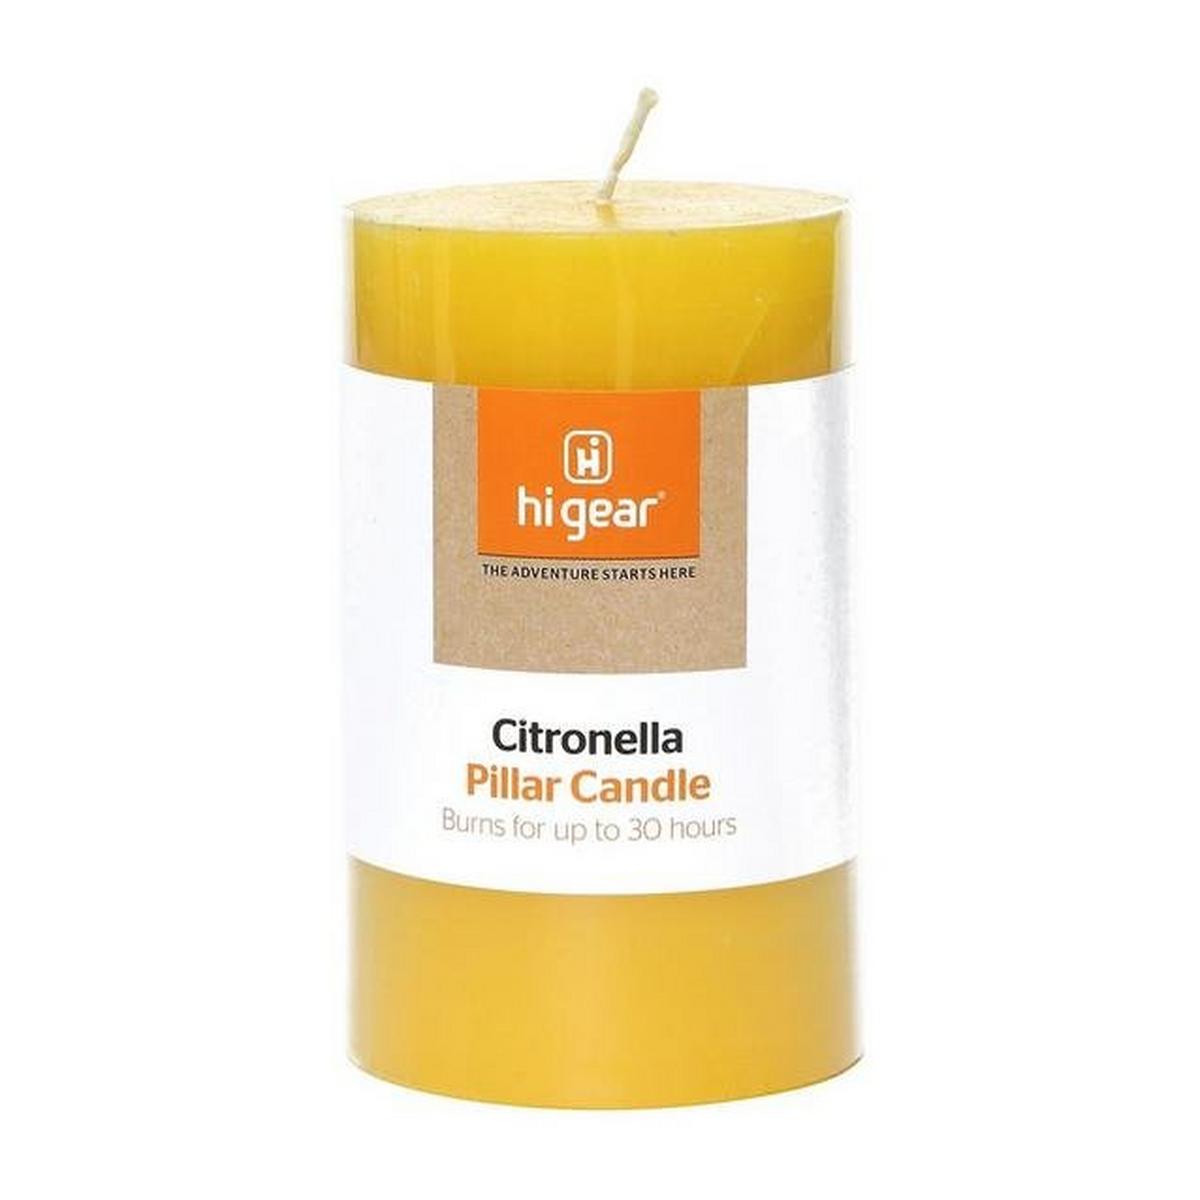 Hi-gear Citronella Pillar Candle